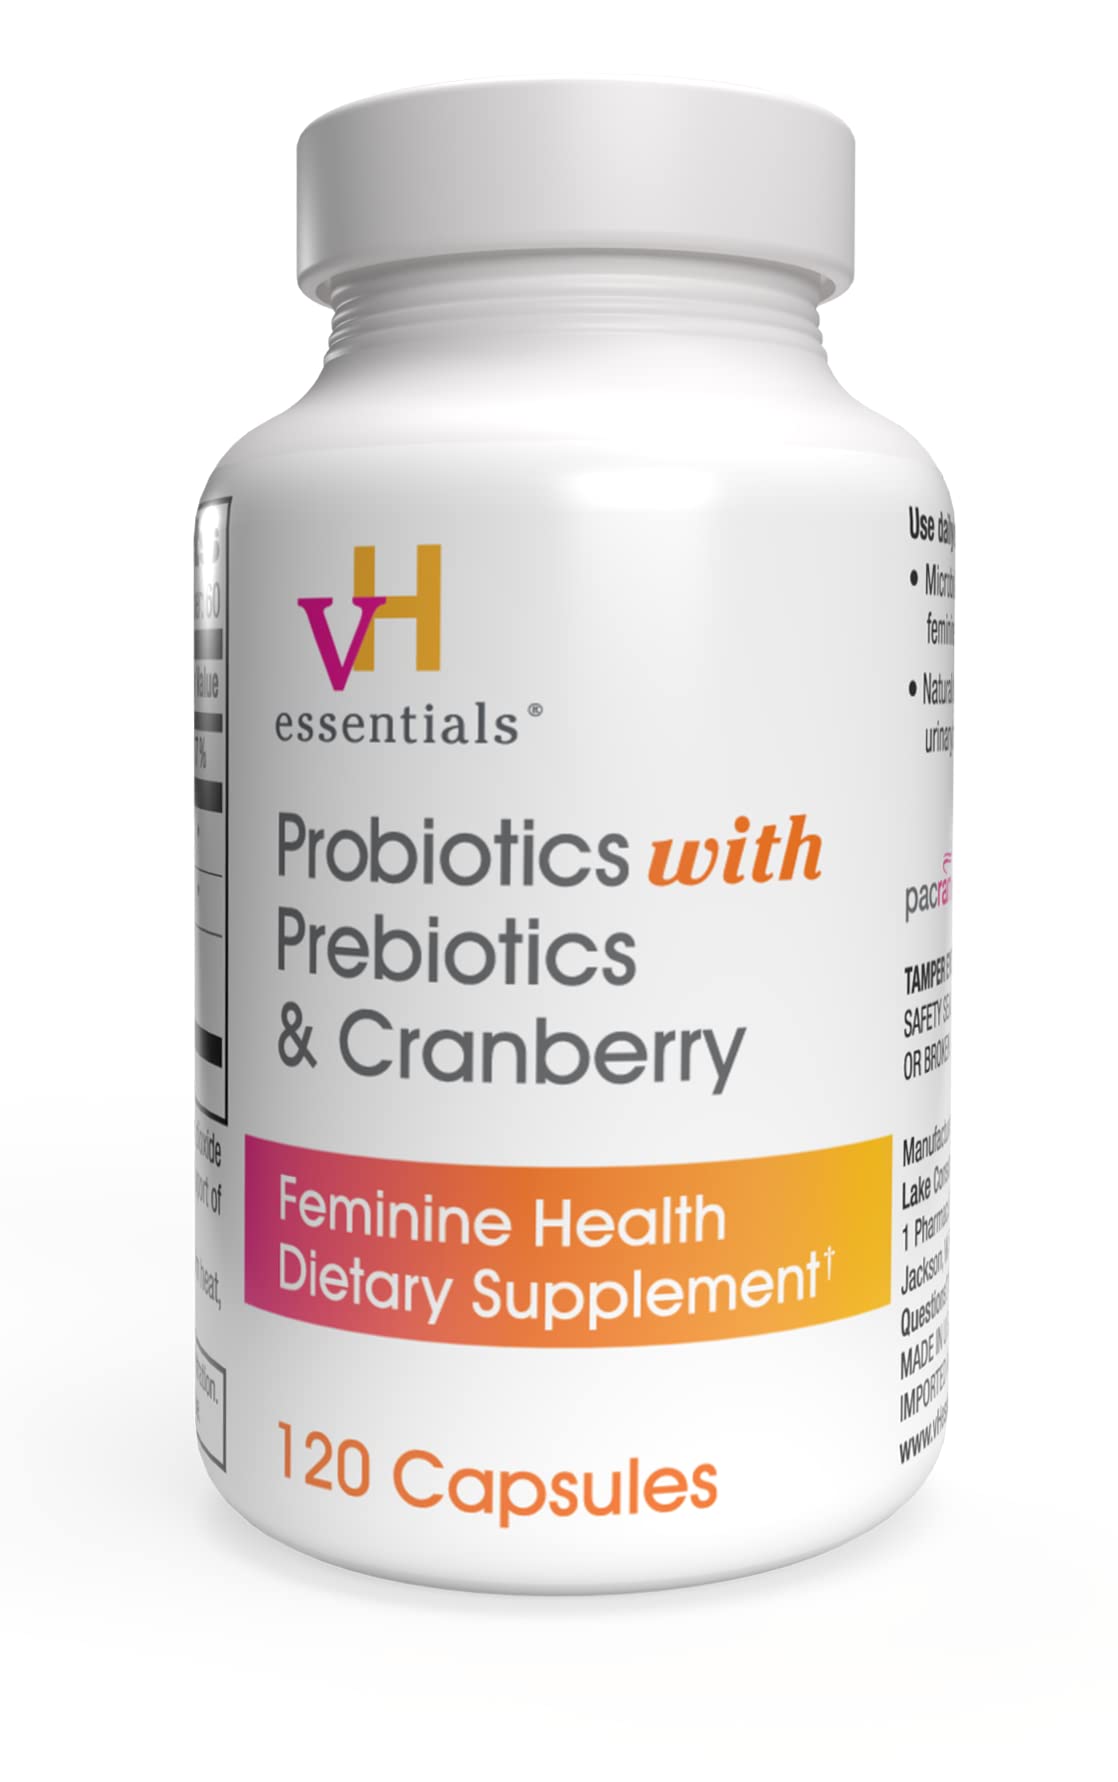 Vh Essentials Probiotics With Prebiotics & Cranberry Reviews: Unbiased Analysis